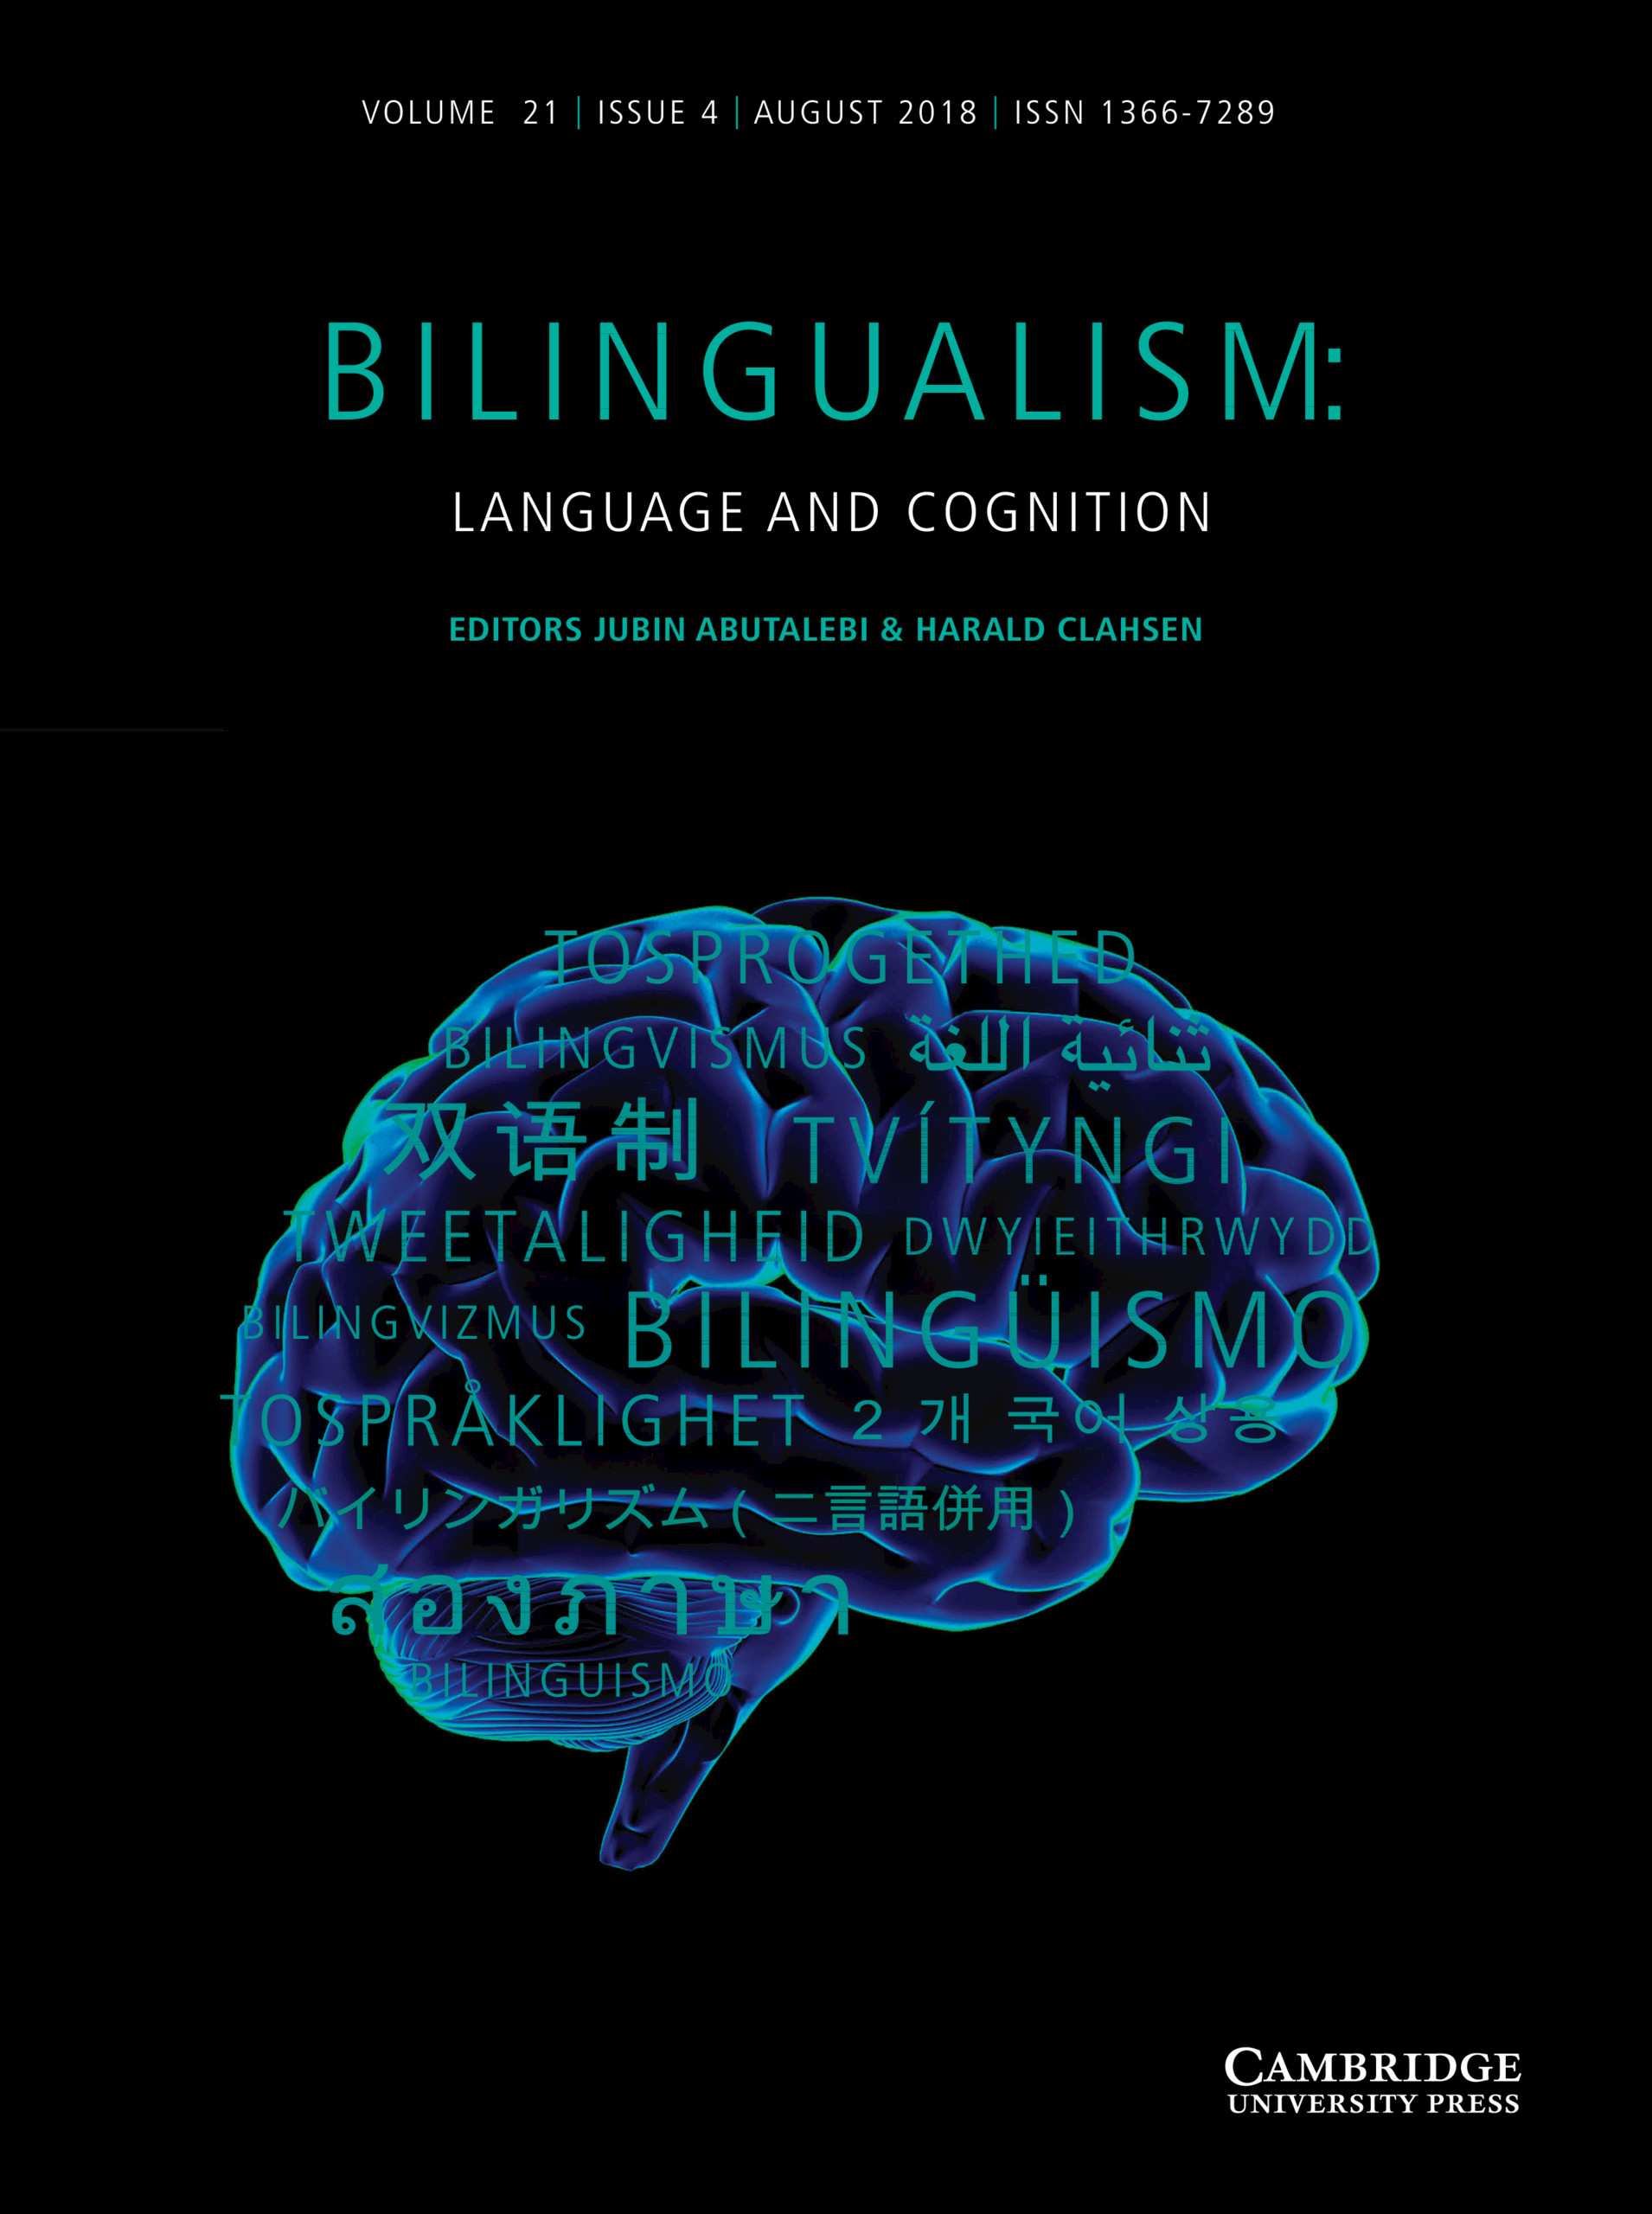 bilingualism__language and cognition